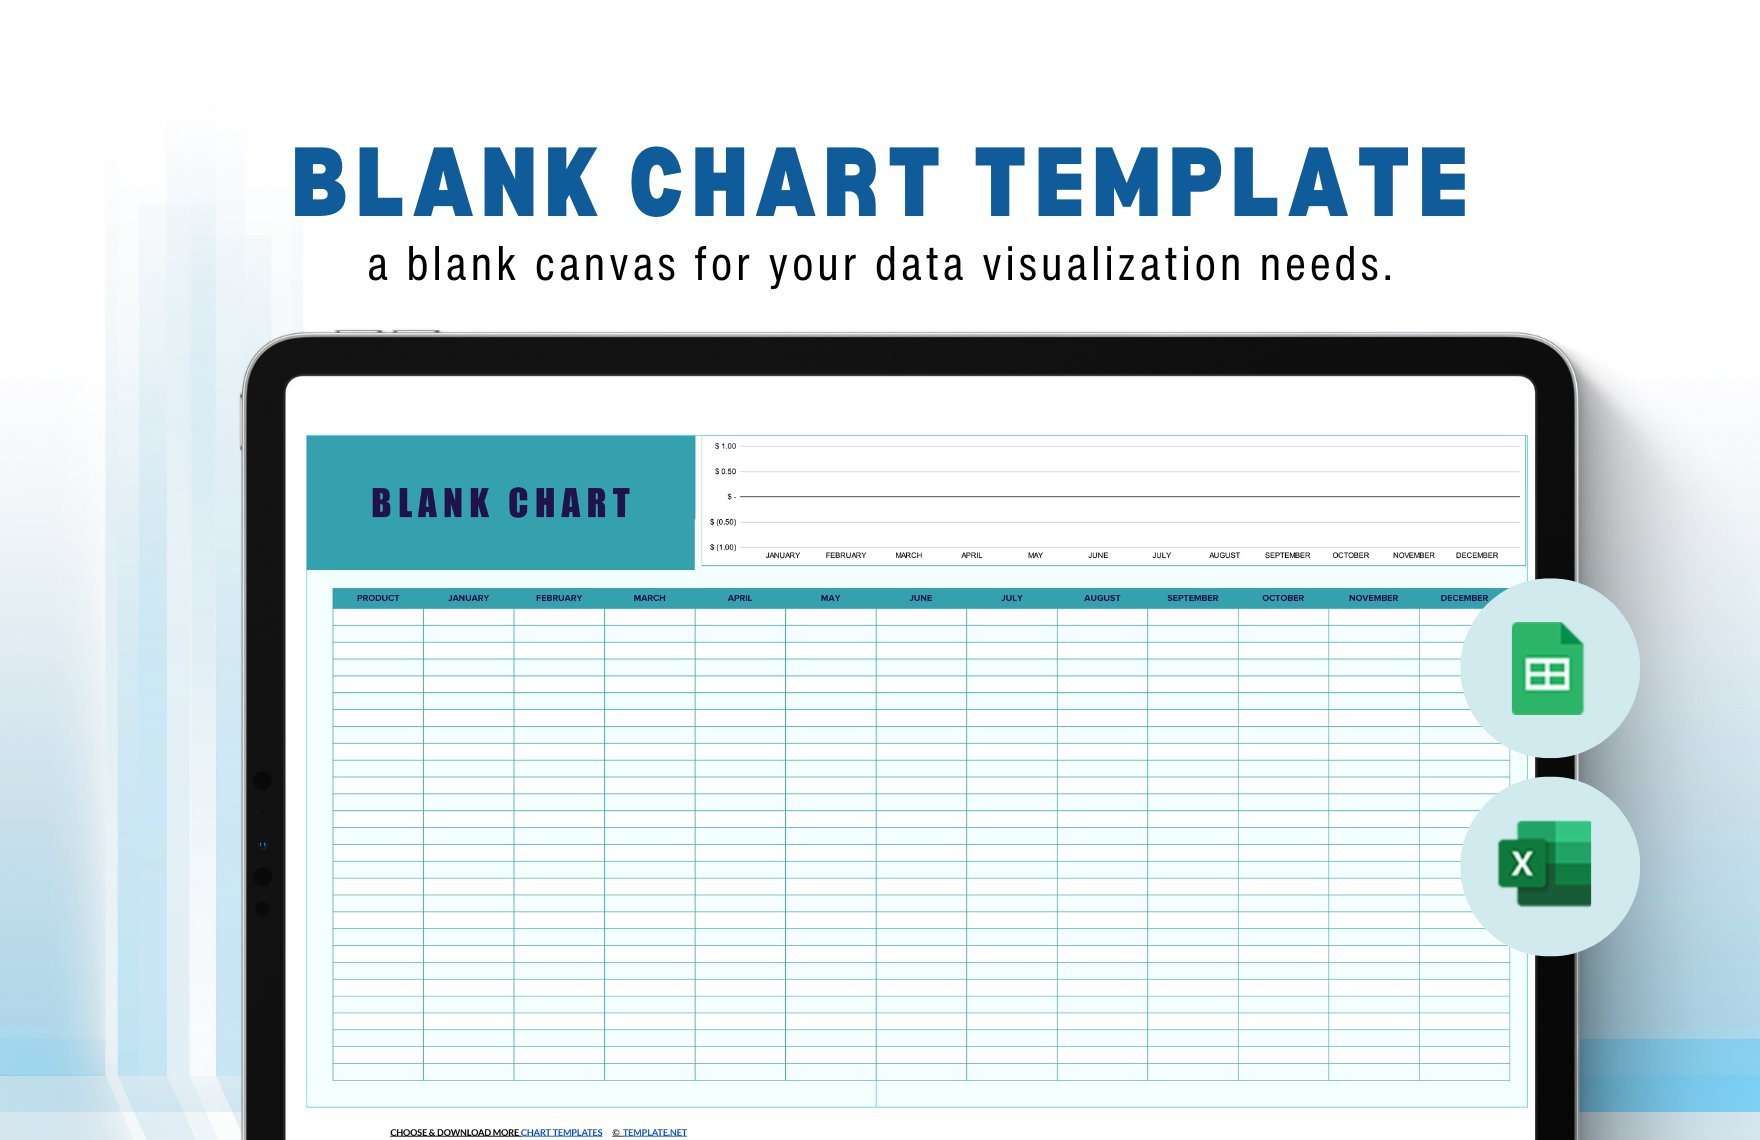 Free Blank Chart Template